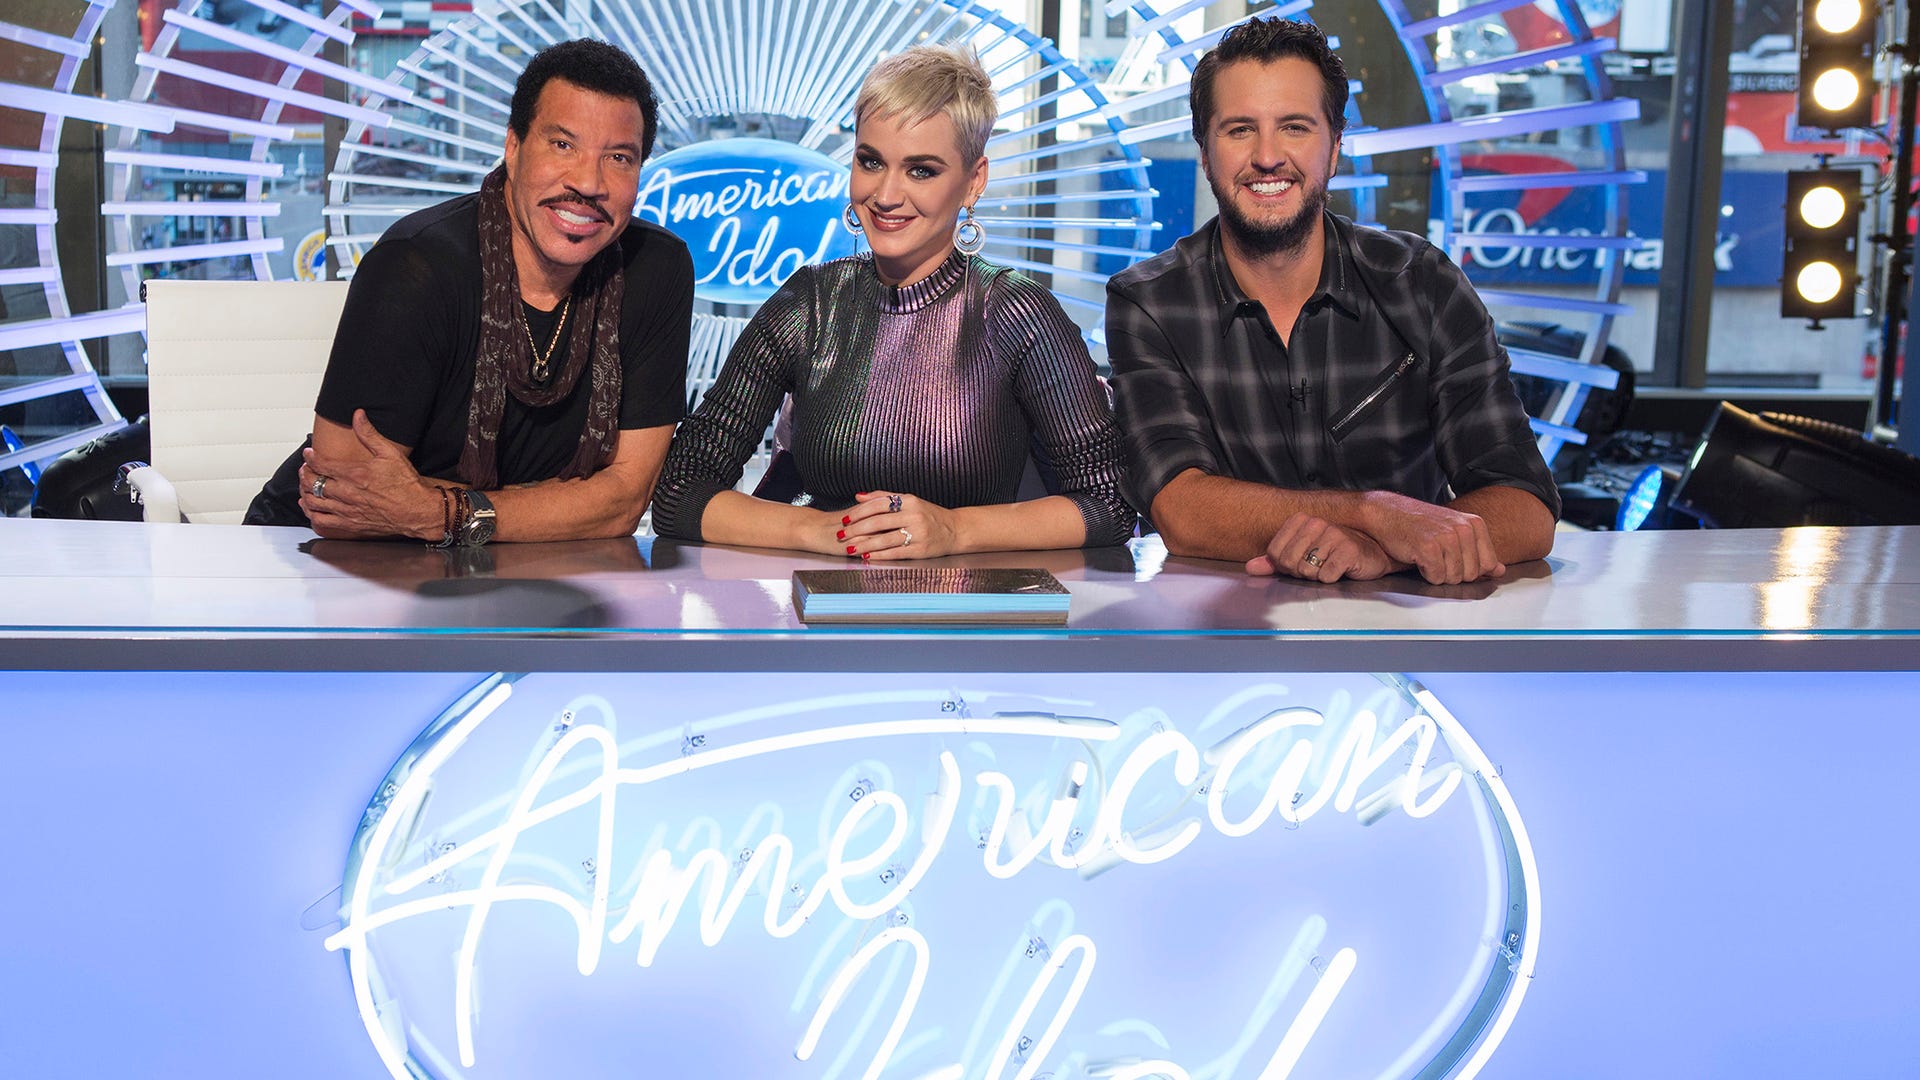 Lionel Richie, Katy Perry and Luke Bryan, American Idol